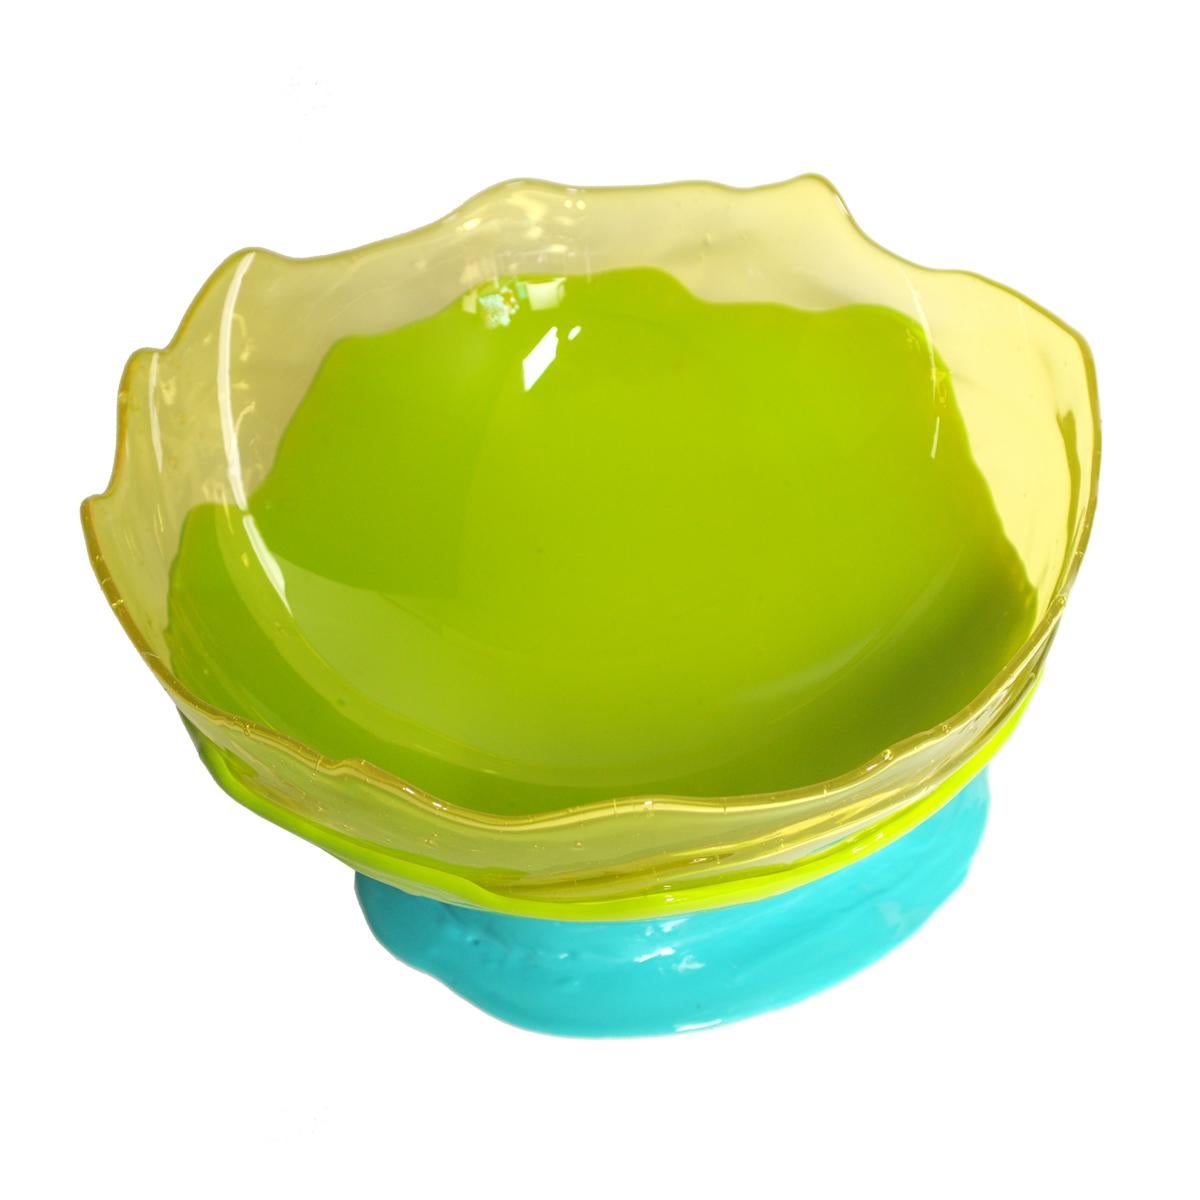 Résine Grand vase Collina medium en résine jaune citron clair turquoise de Gaetano Pesce en vente